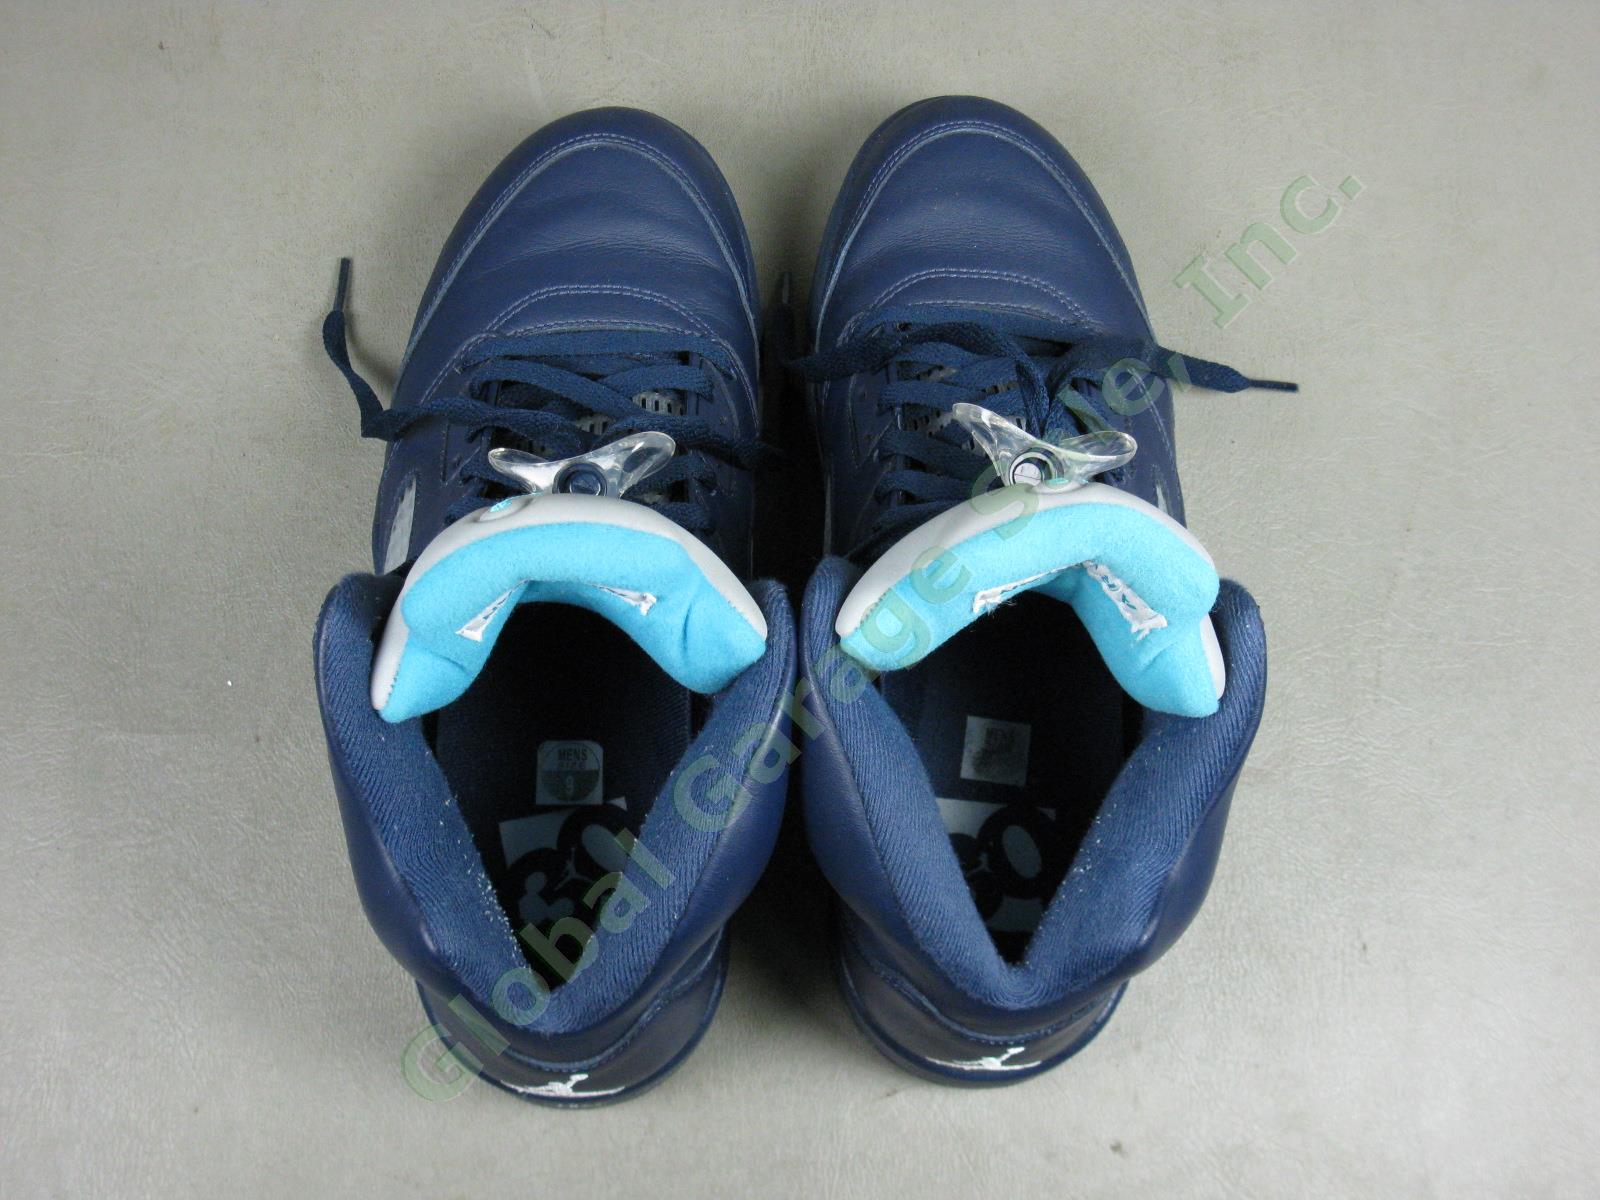 Nike Air Jordan 5 V Retro Hornets Shoes Midnight Navy Blue White 136027-405 Sz 9 5